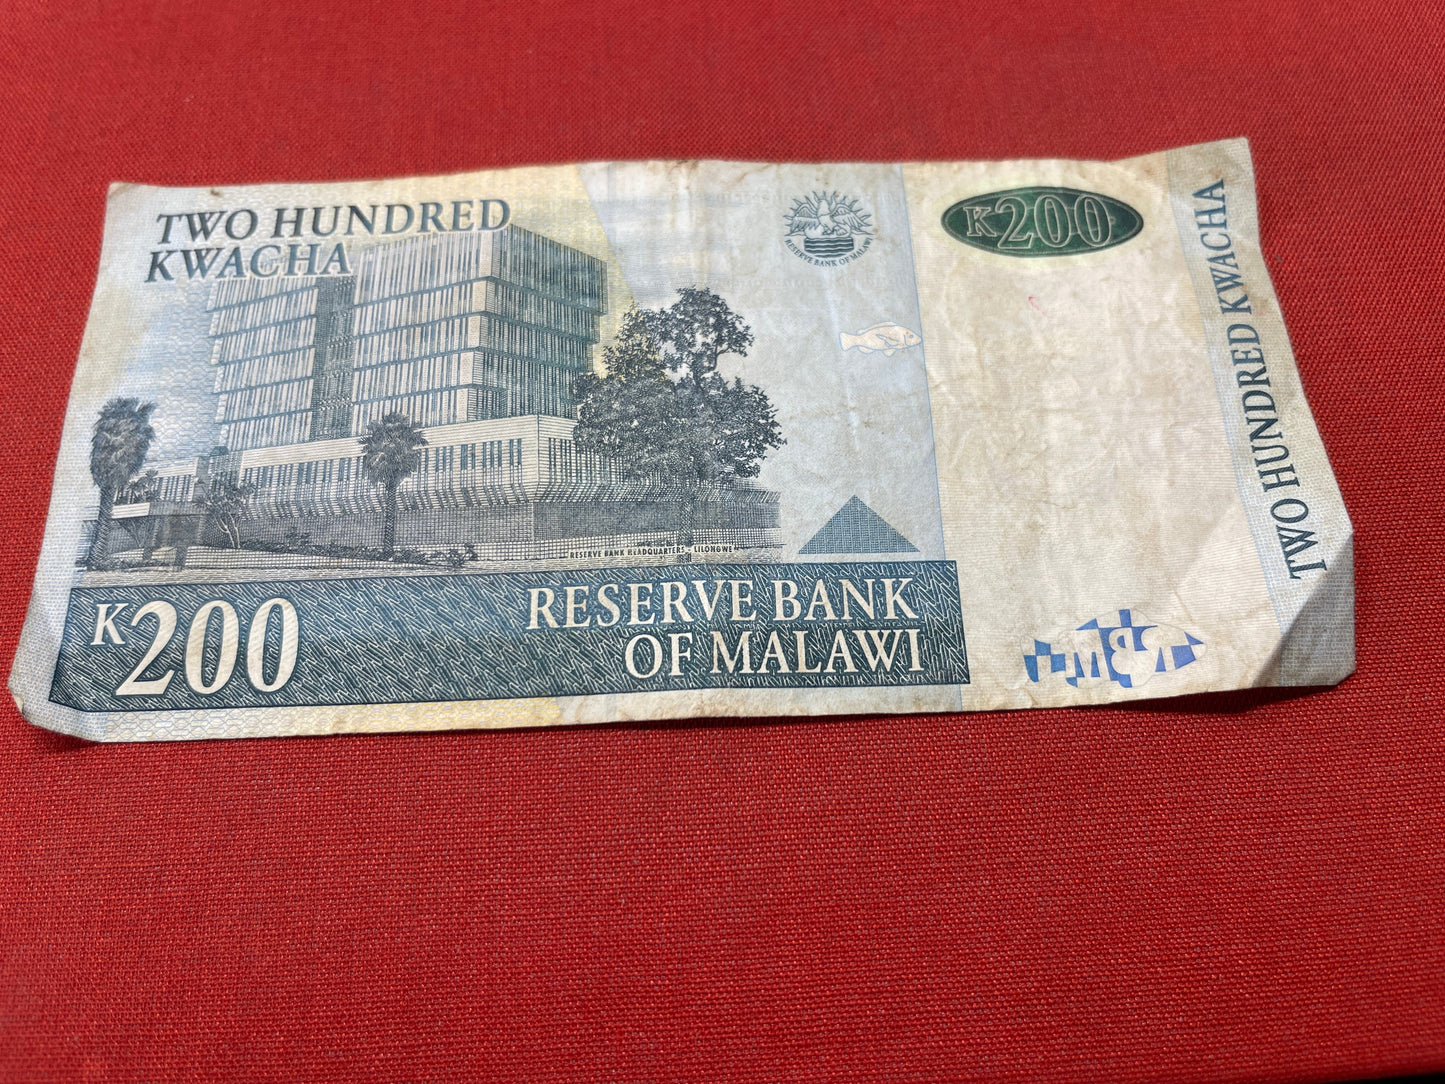 Reserve Bank of Malawi 200 Kwacha